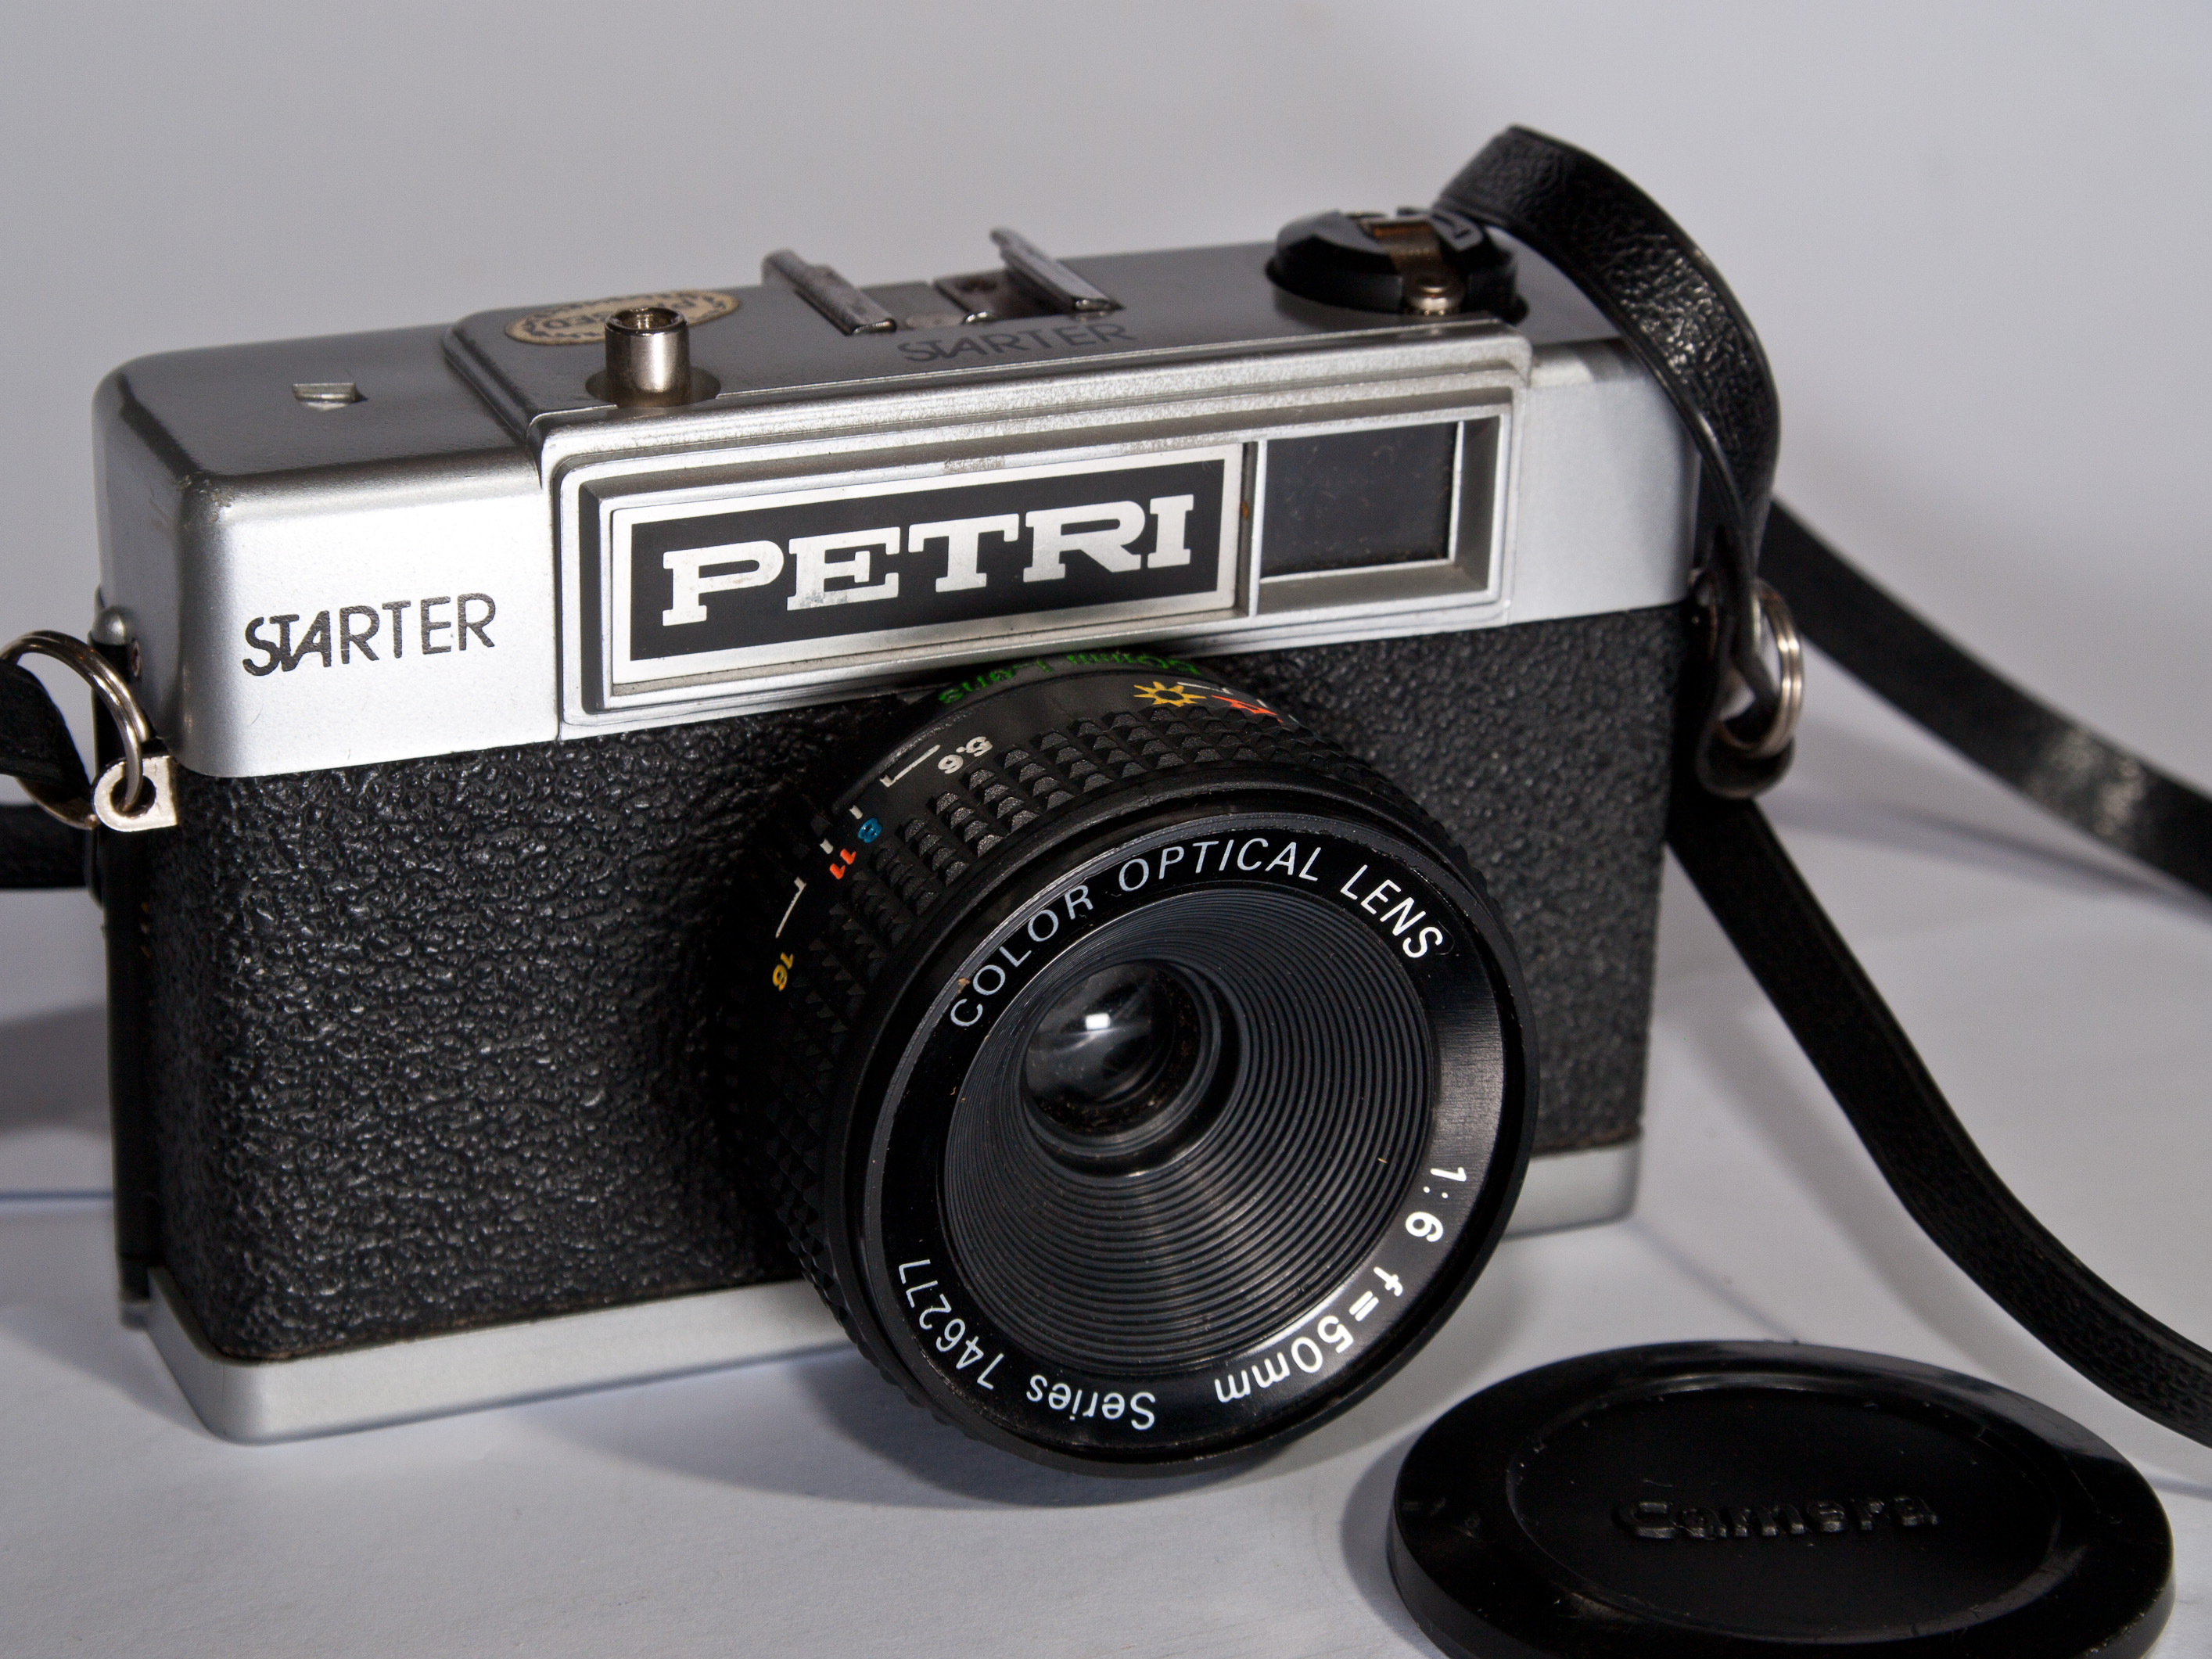 Petri Starter 35mm camera